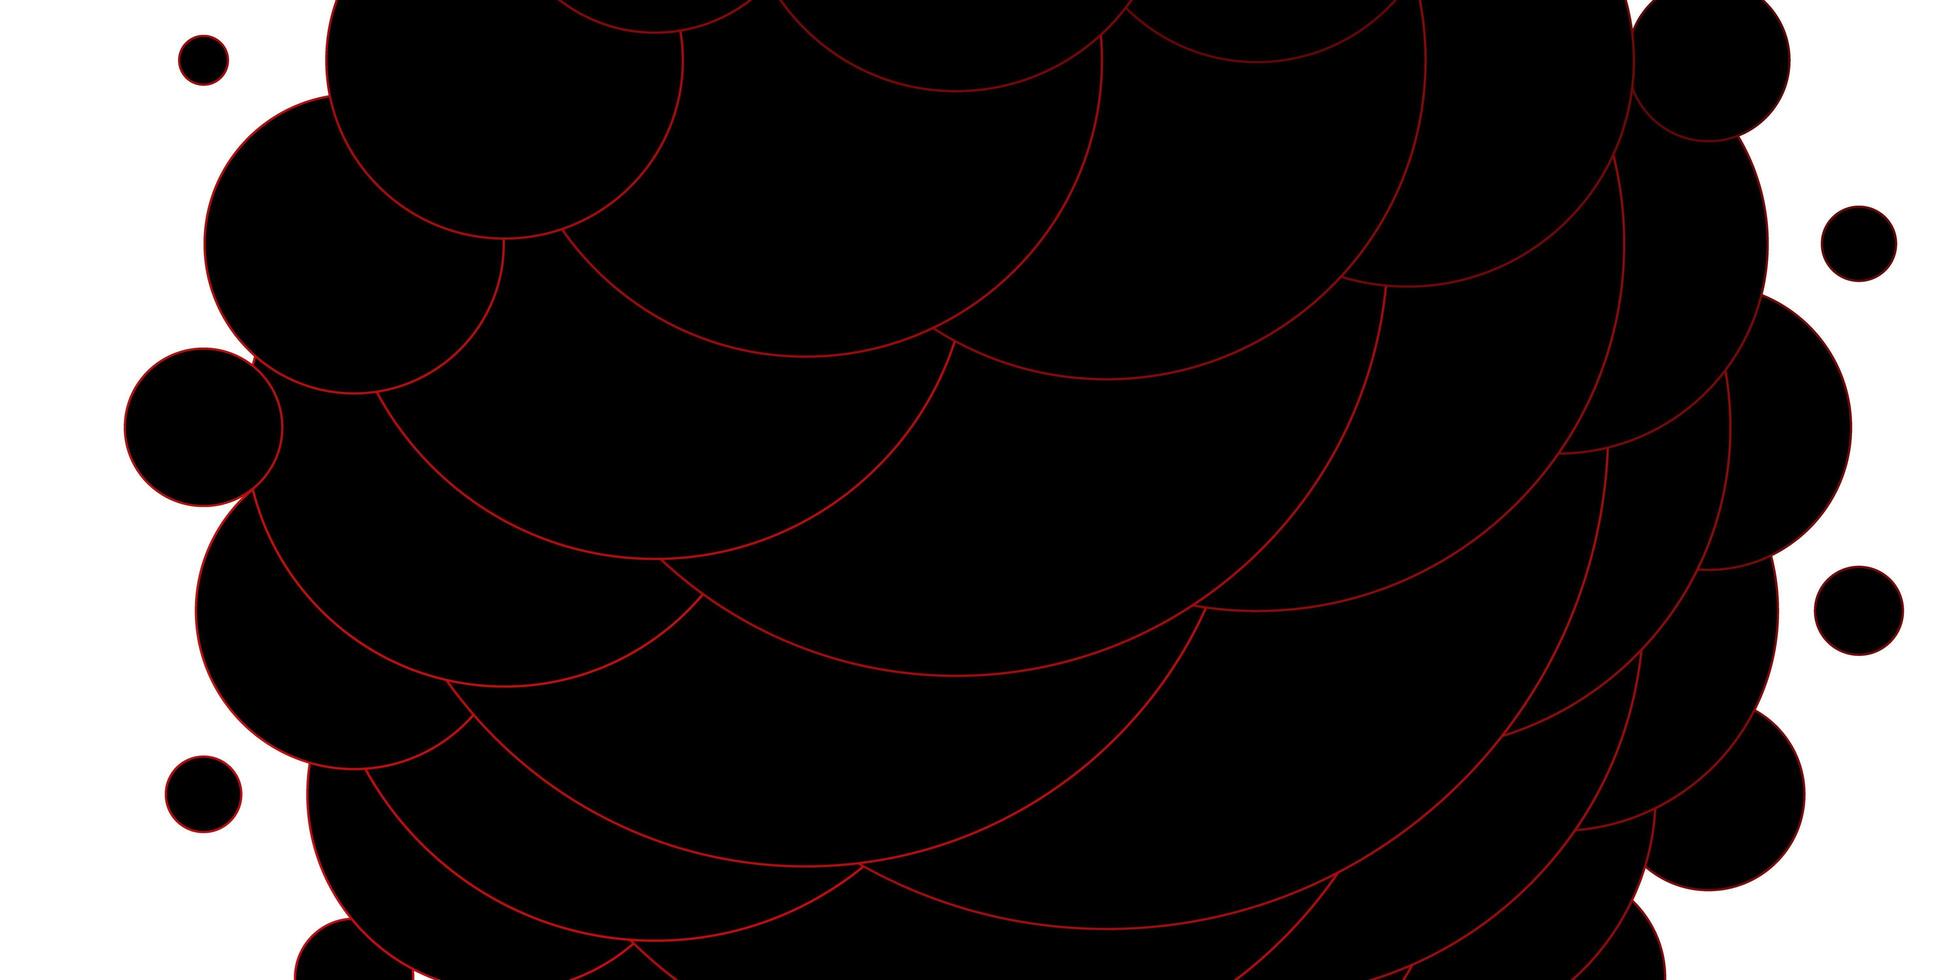 telón de fondo de vector rojo claro con puntos diseño decorativo abstracto en estilo degradado con patrón de burbujas para folletos folletos